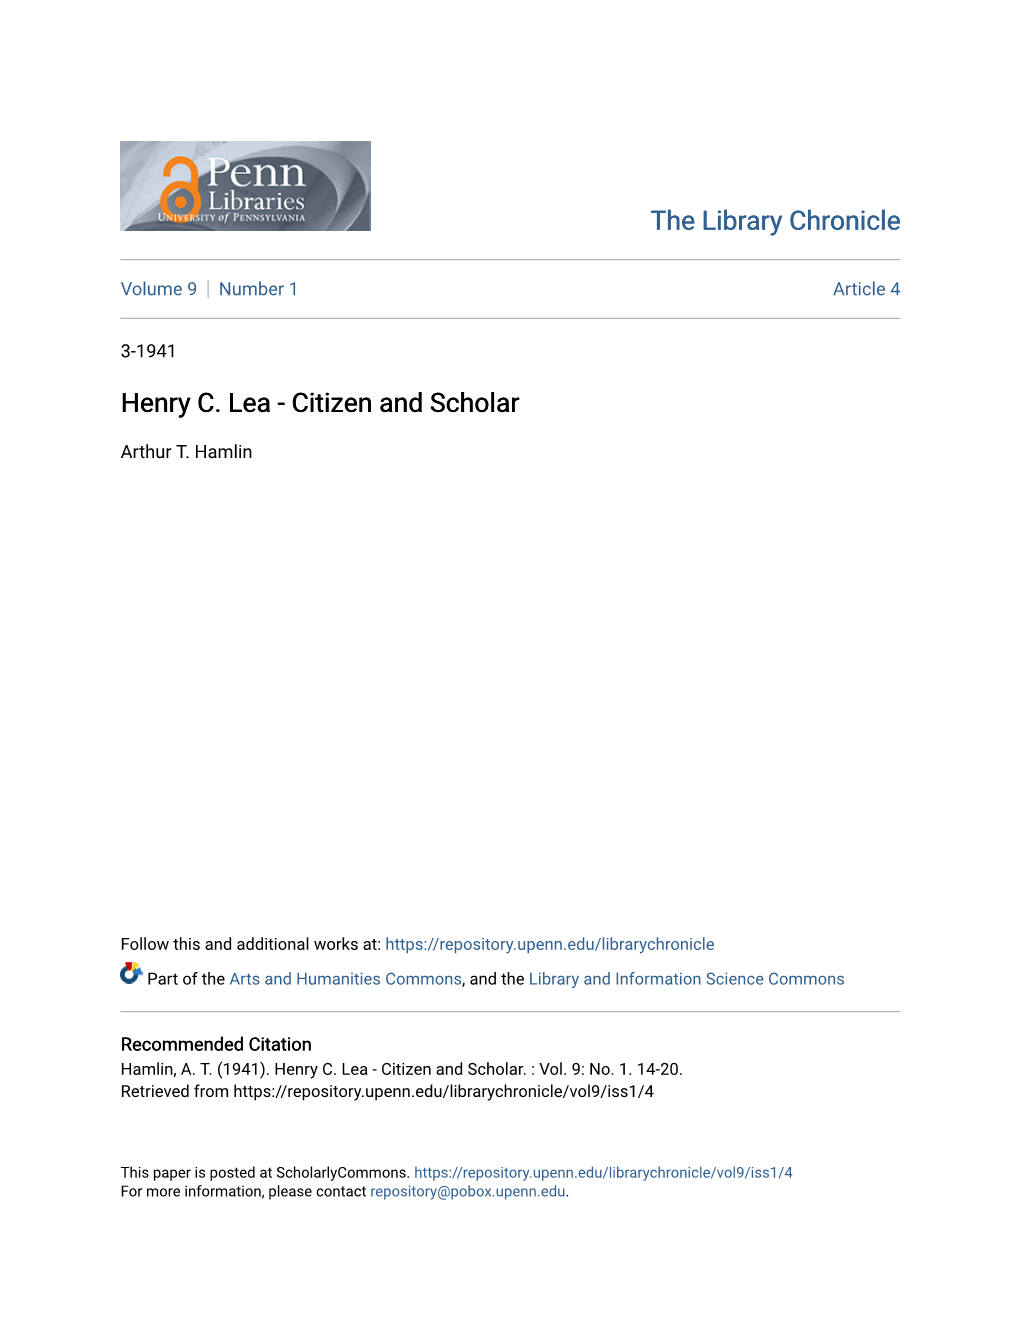 Henry C. Lea - Citizen and Scholar